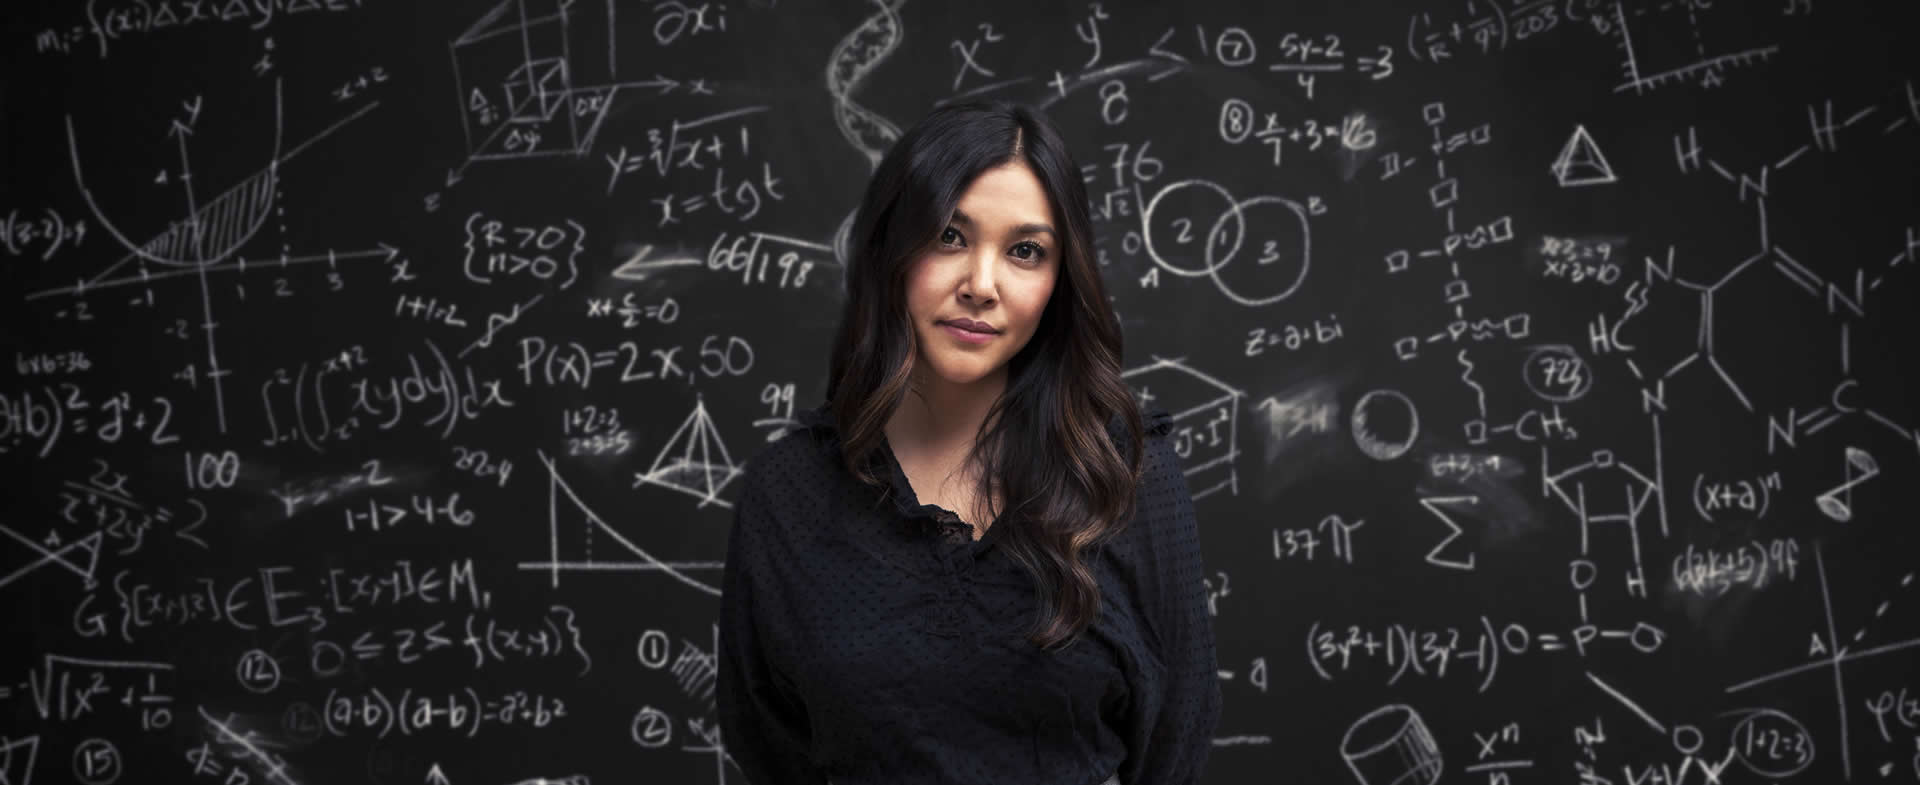 scientist blackboard